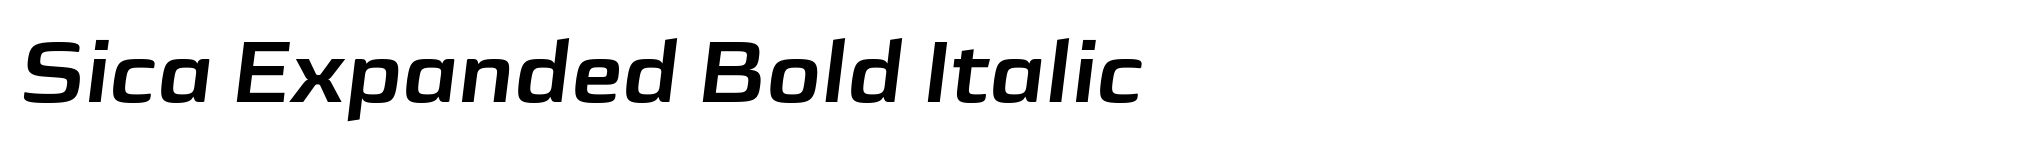 Sica Expanded Bold Italic image